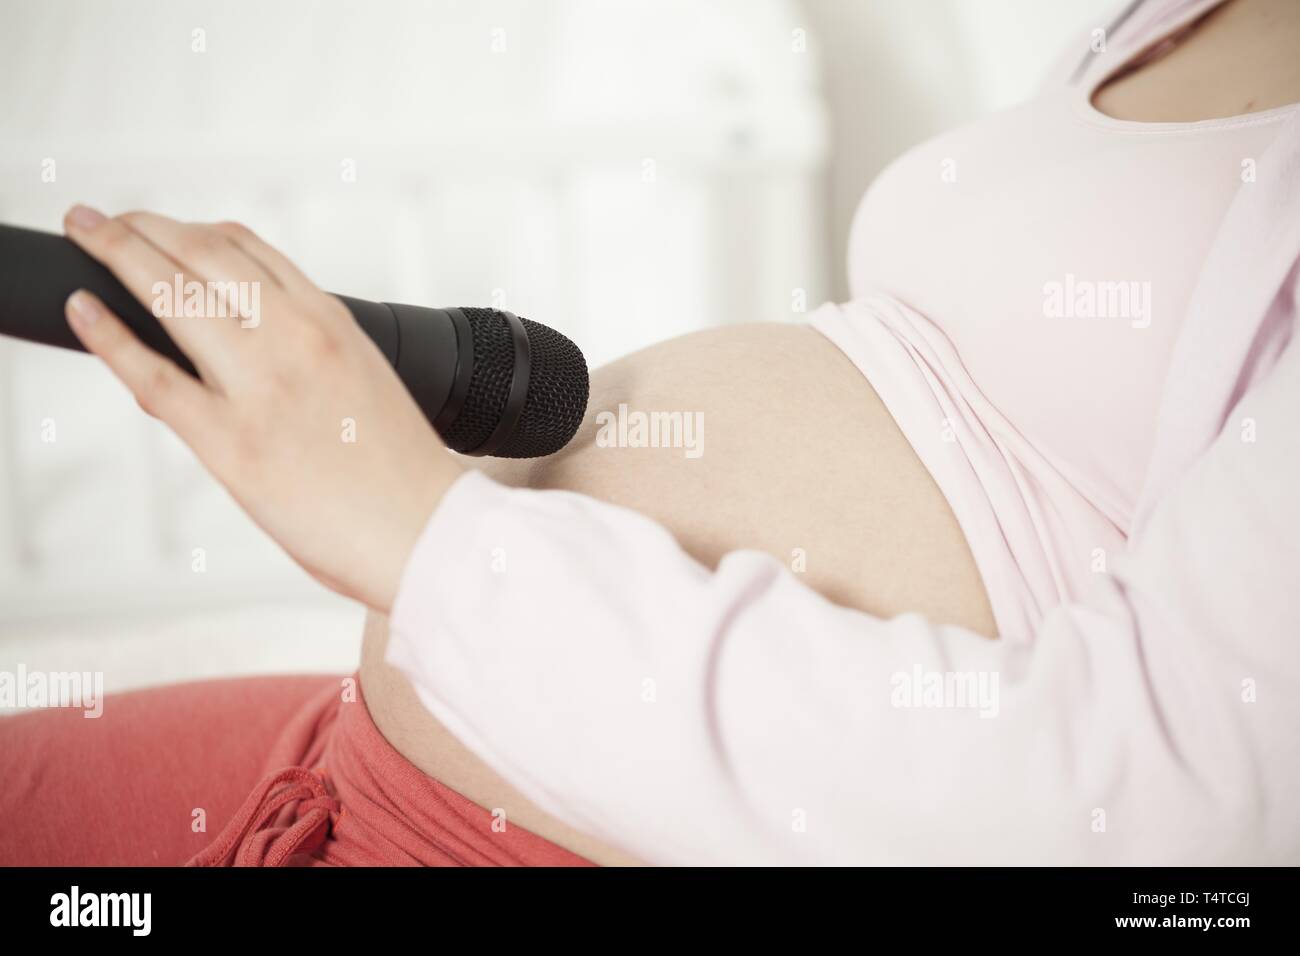 Donna incinta holding micrphone sulla pancia Foto Stock